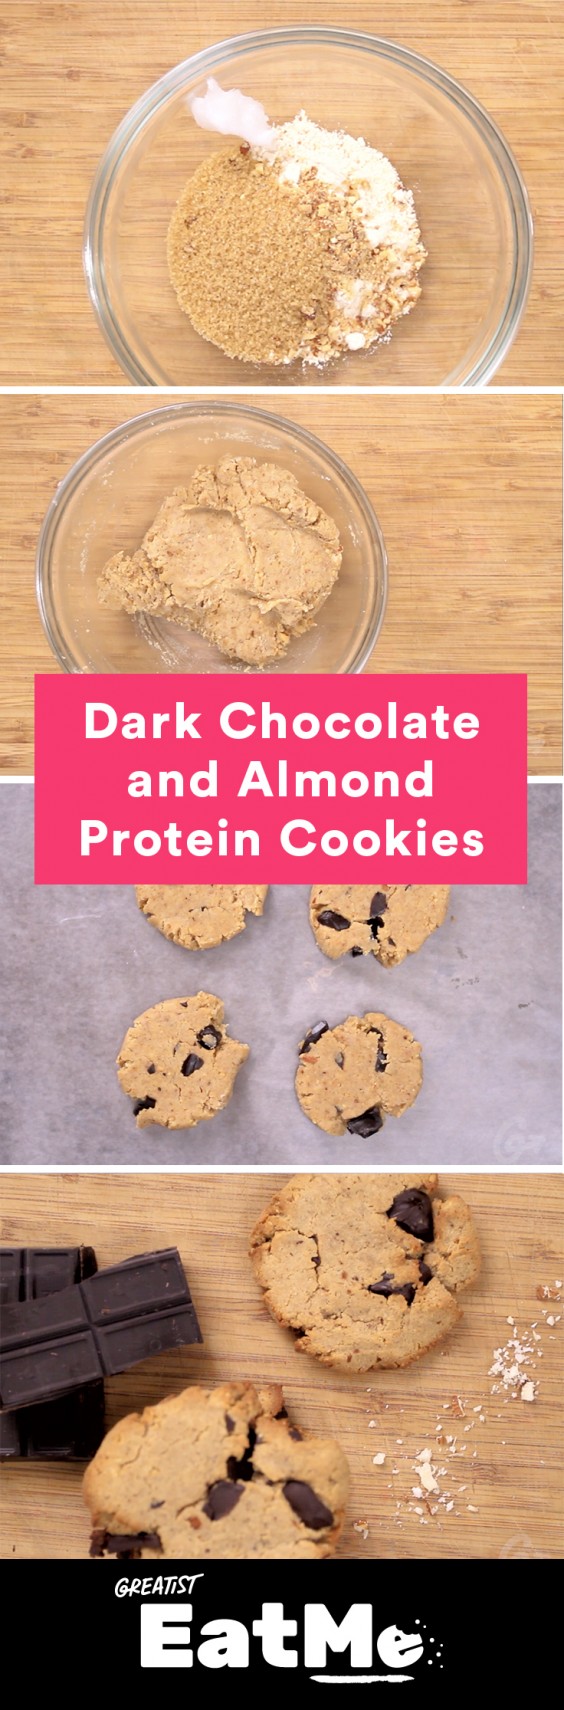 Eat Me Video: Dark Chocolate and Almond Cookies